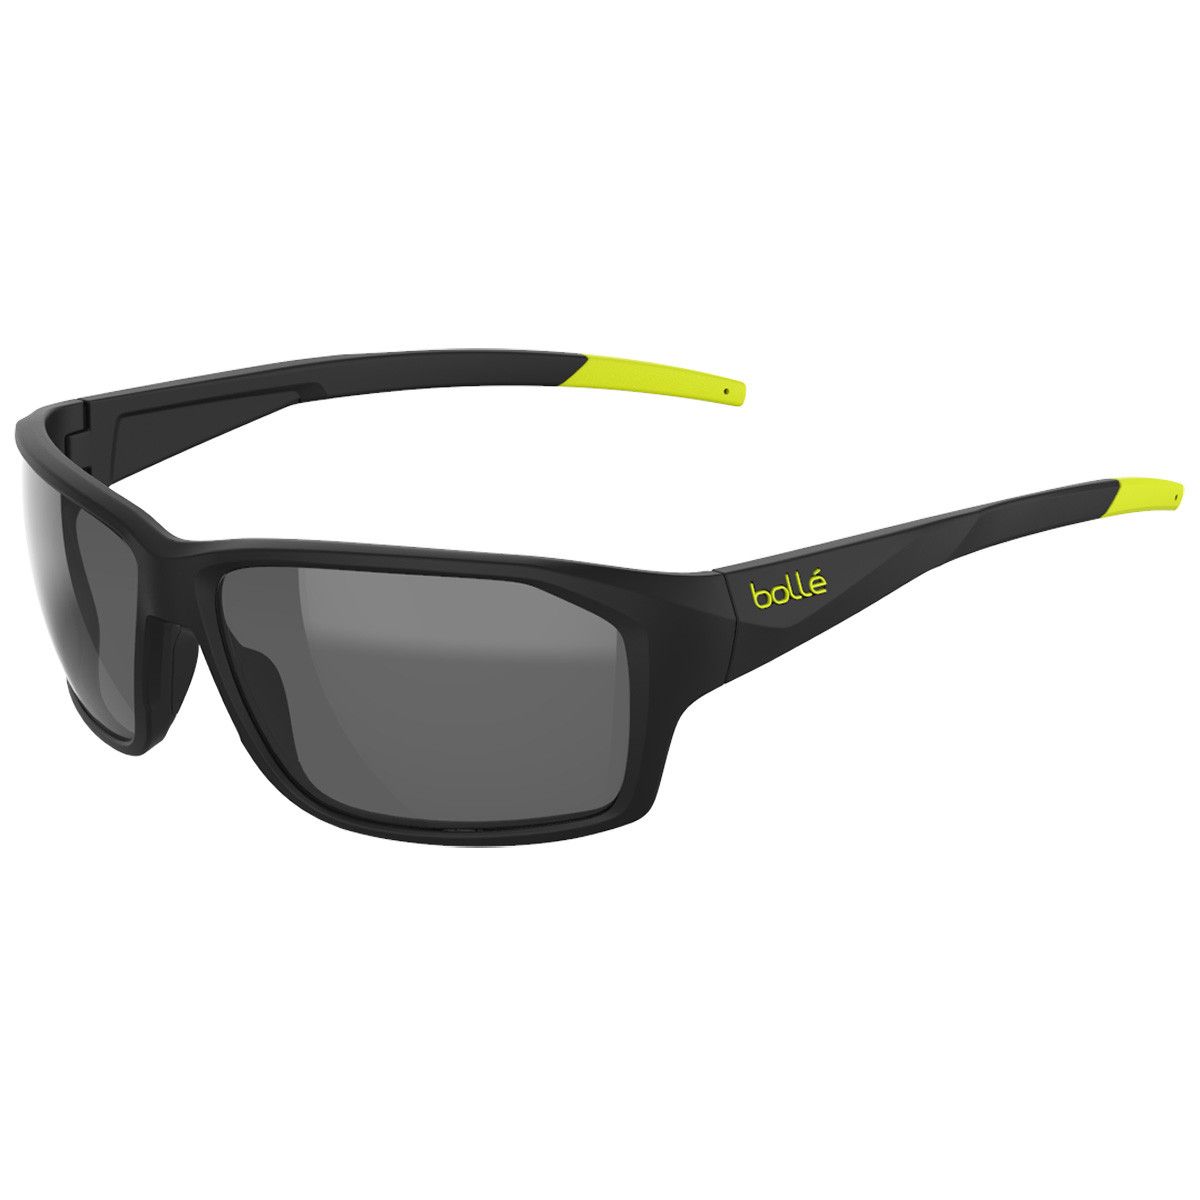 Fishing Prescription Sunglasses - Polarized Glasses - SportEyes